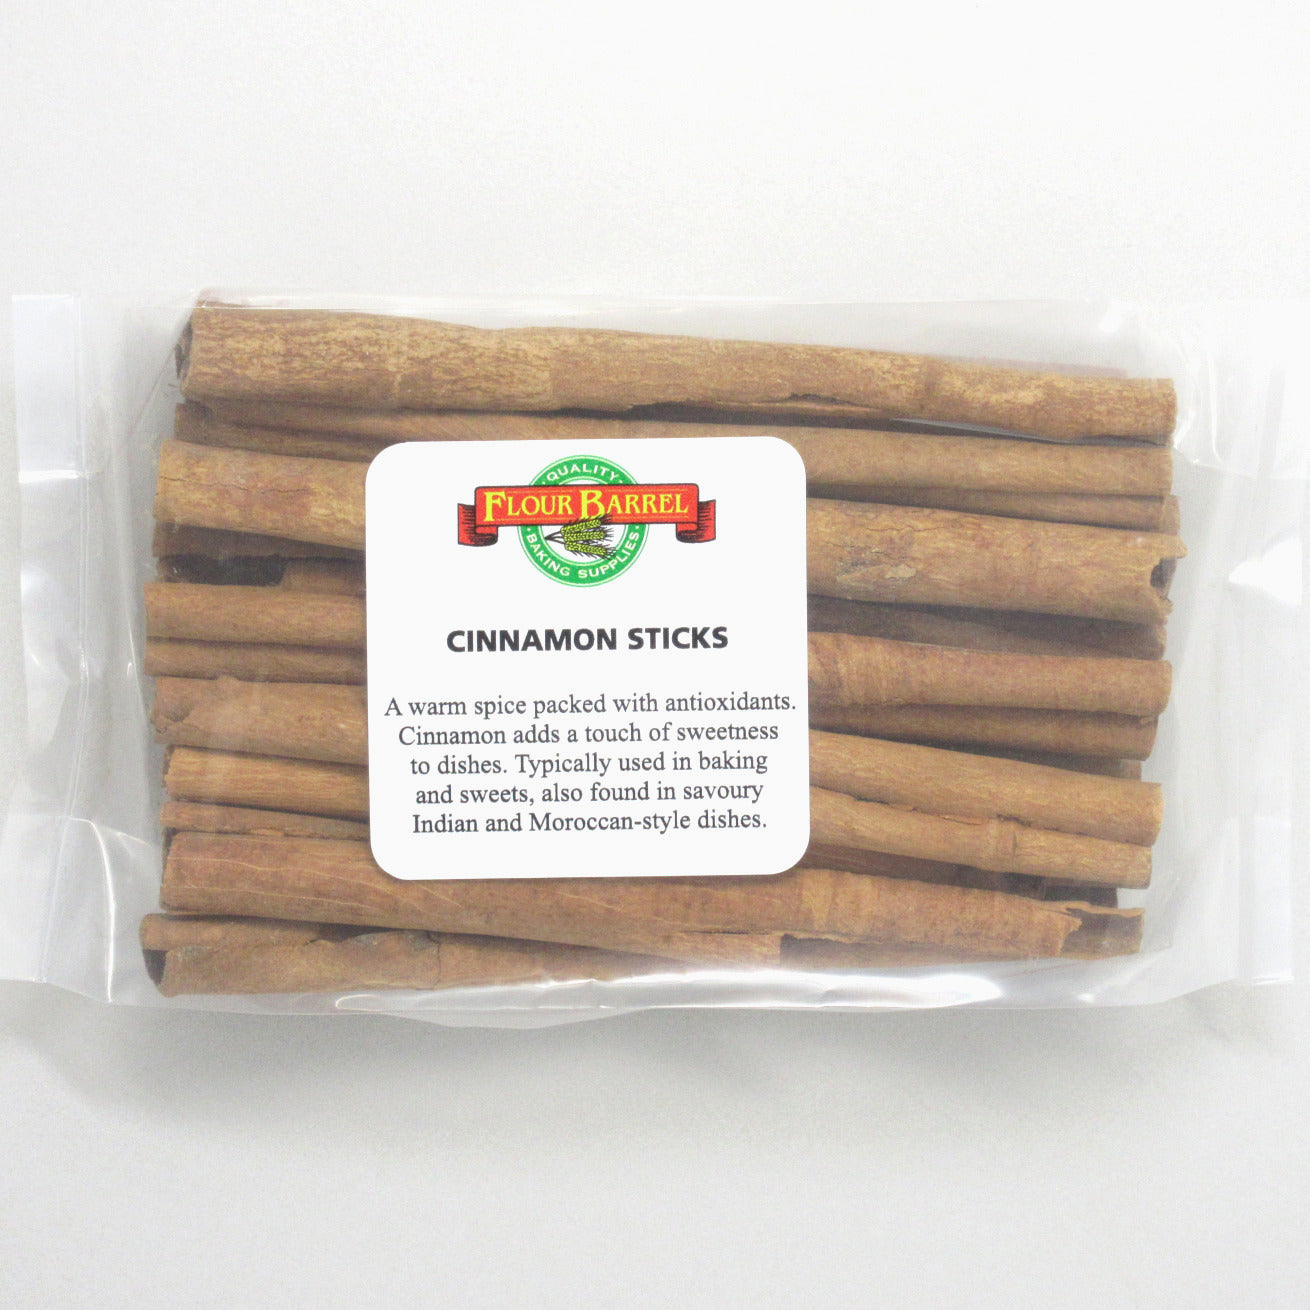 Flour Barrel product image - Cinnamon Sticks